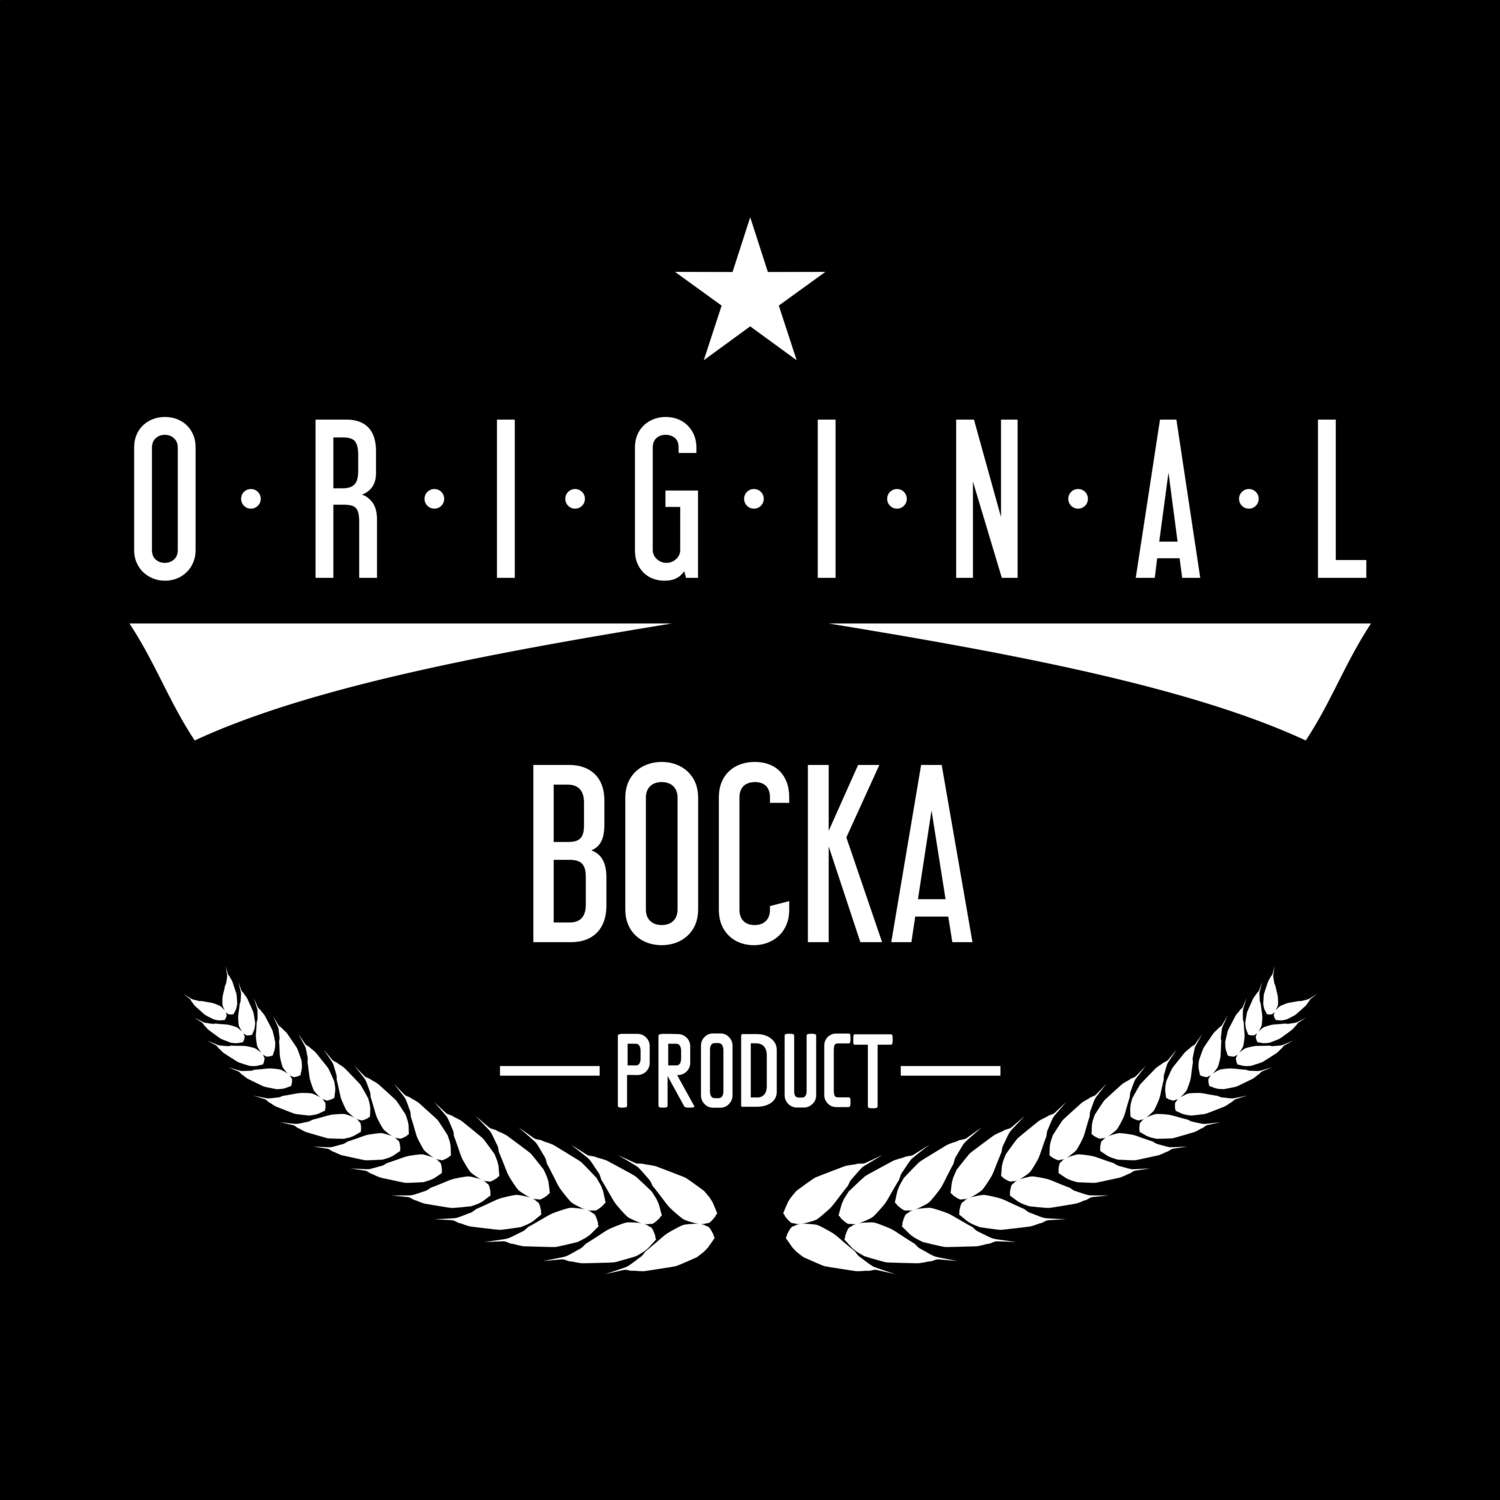 Bocka T-Shirt »Original Product«